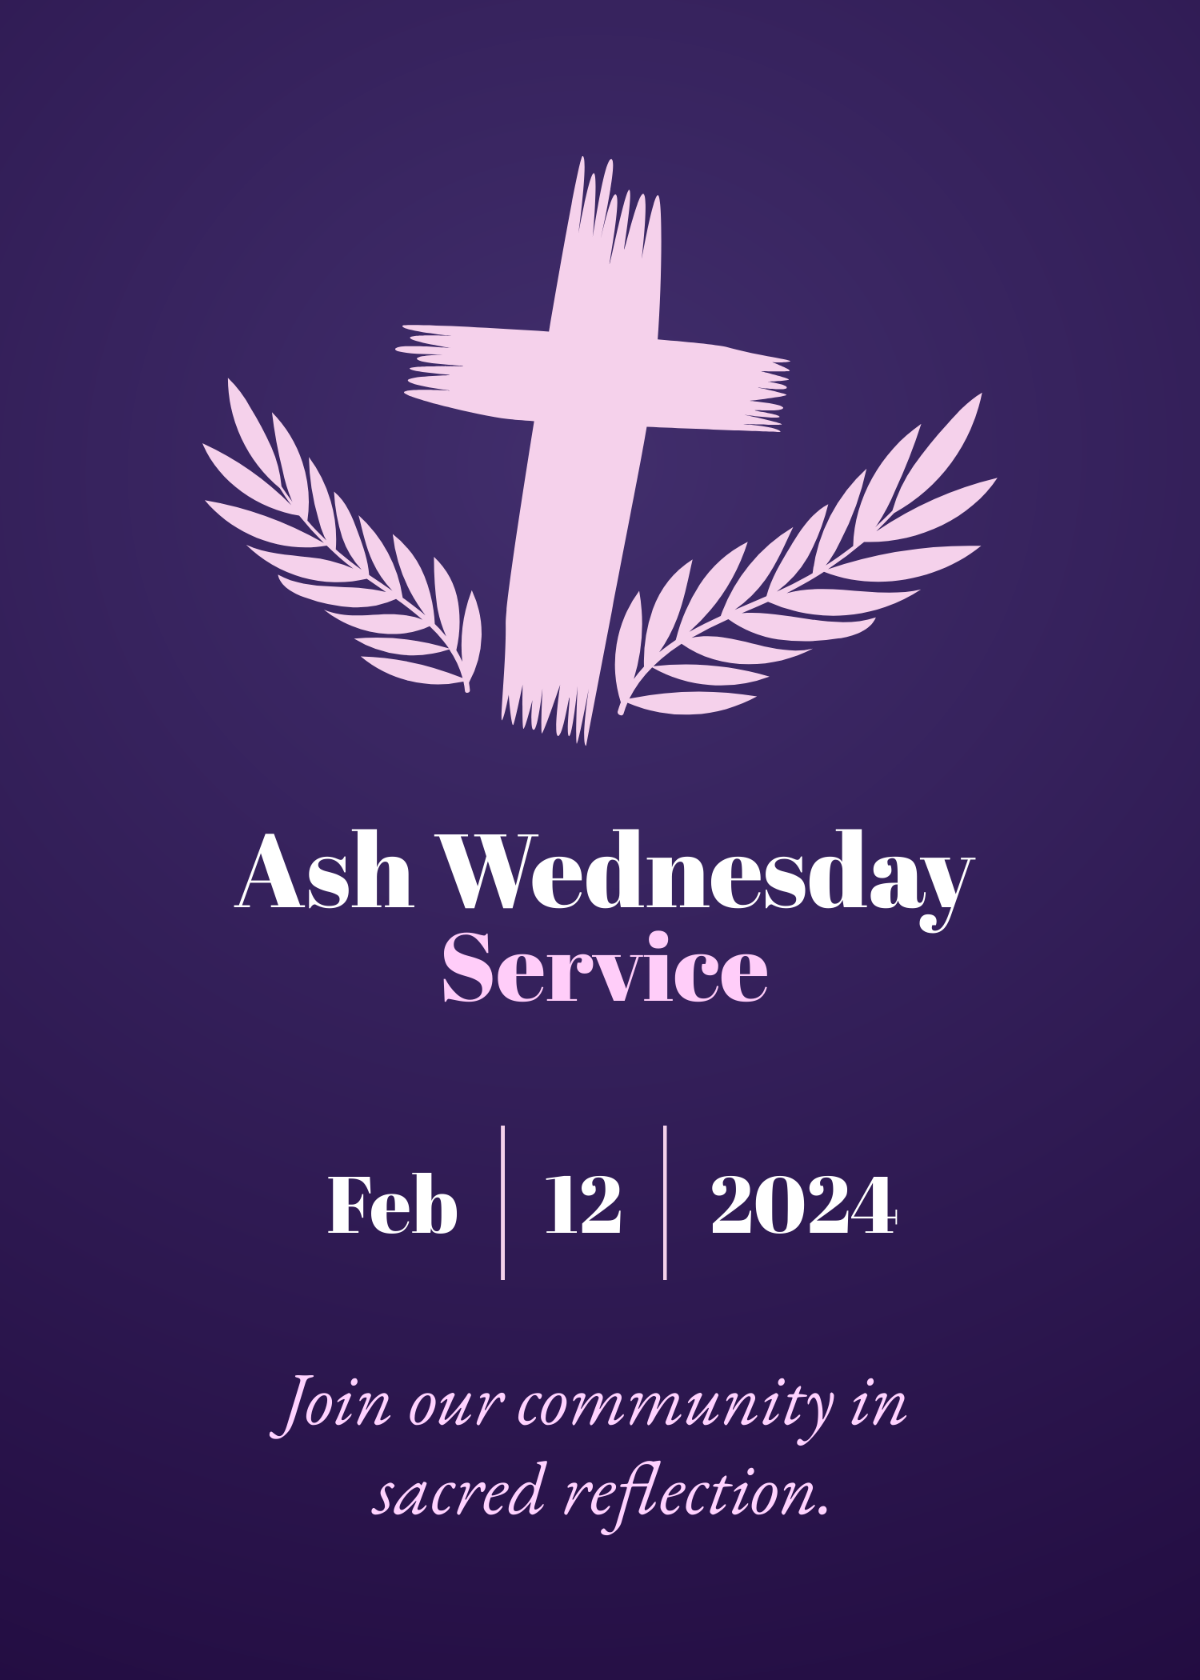 Ash Wednesday Service Invitation Template